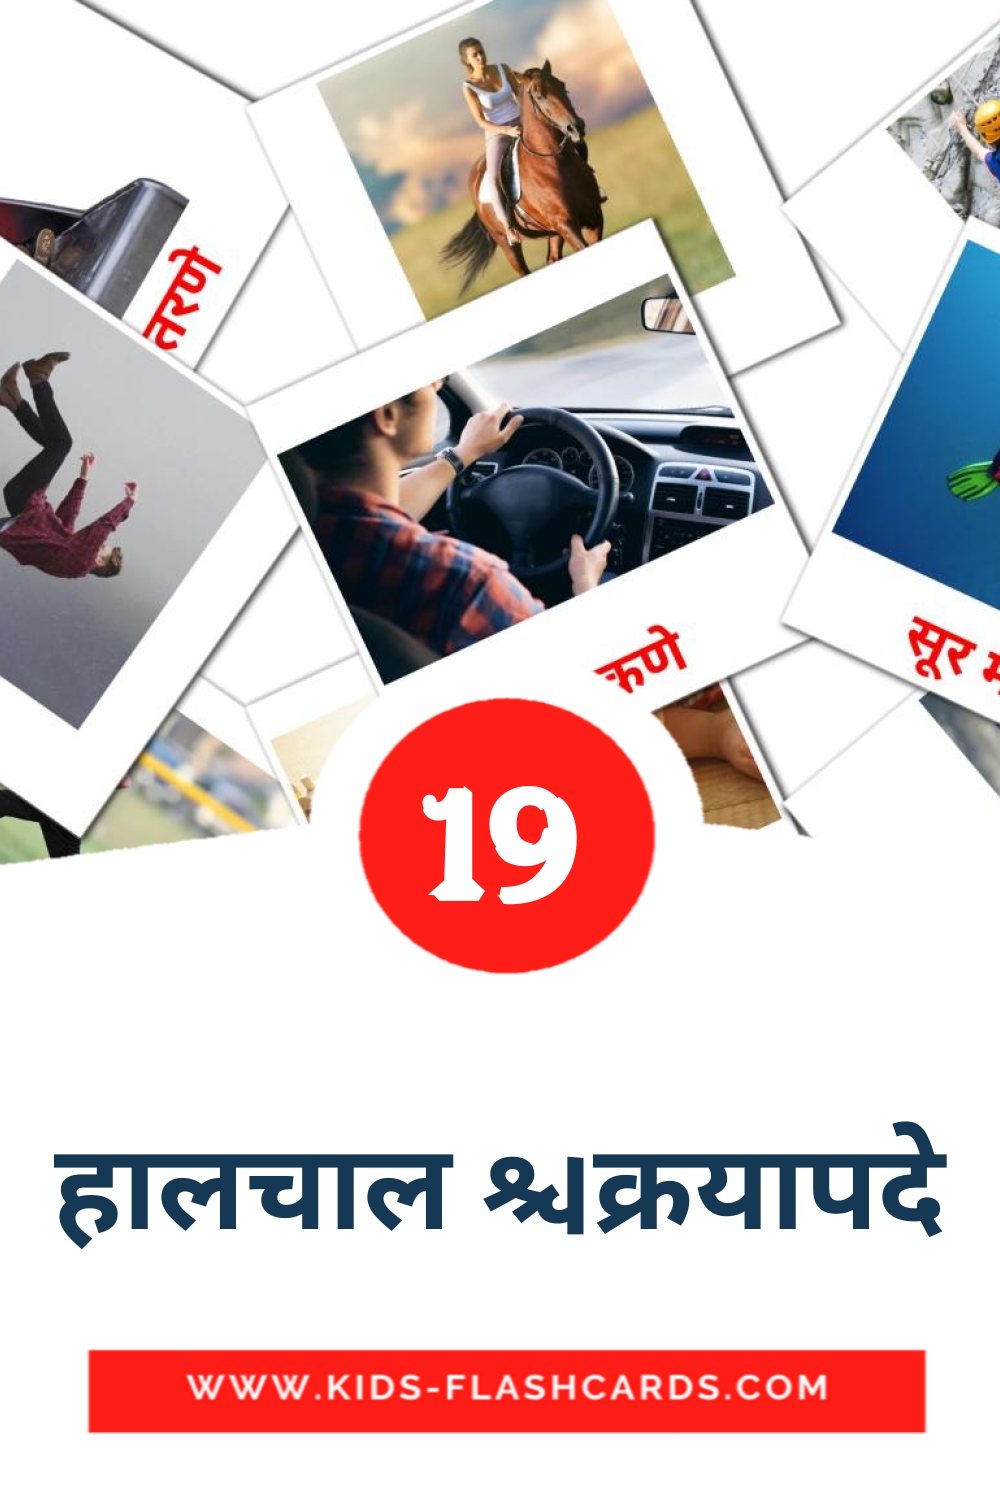 19 tarjetas didacticas de हालचाल क्रियापदे para el jardín de infancia en marathi